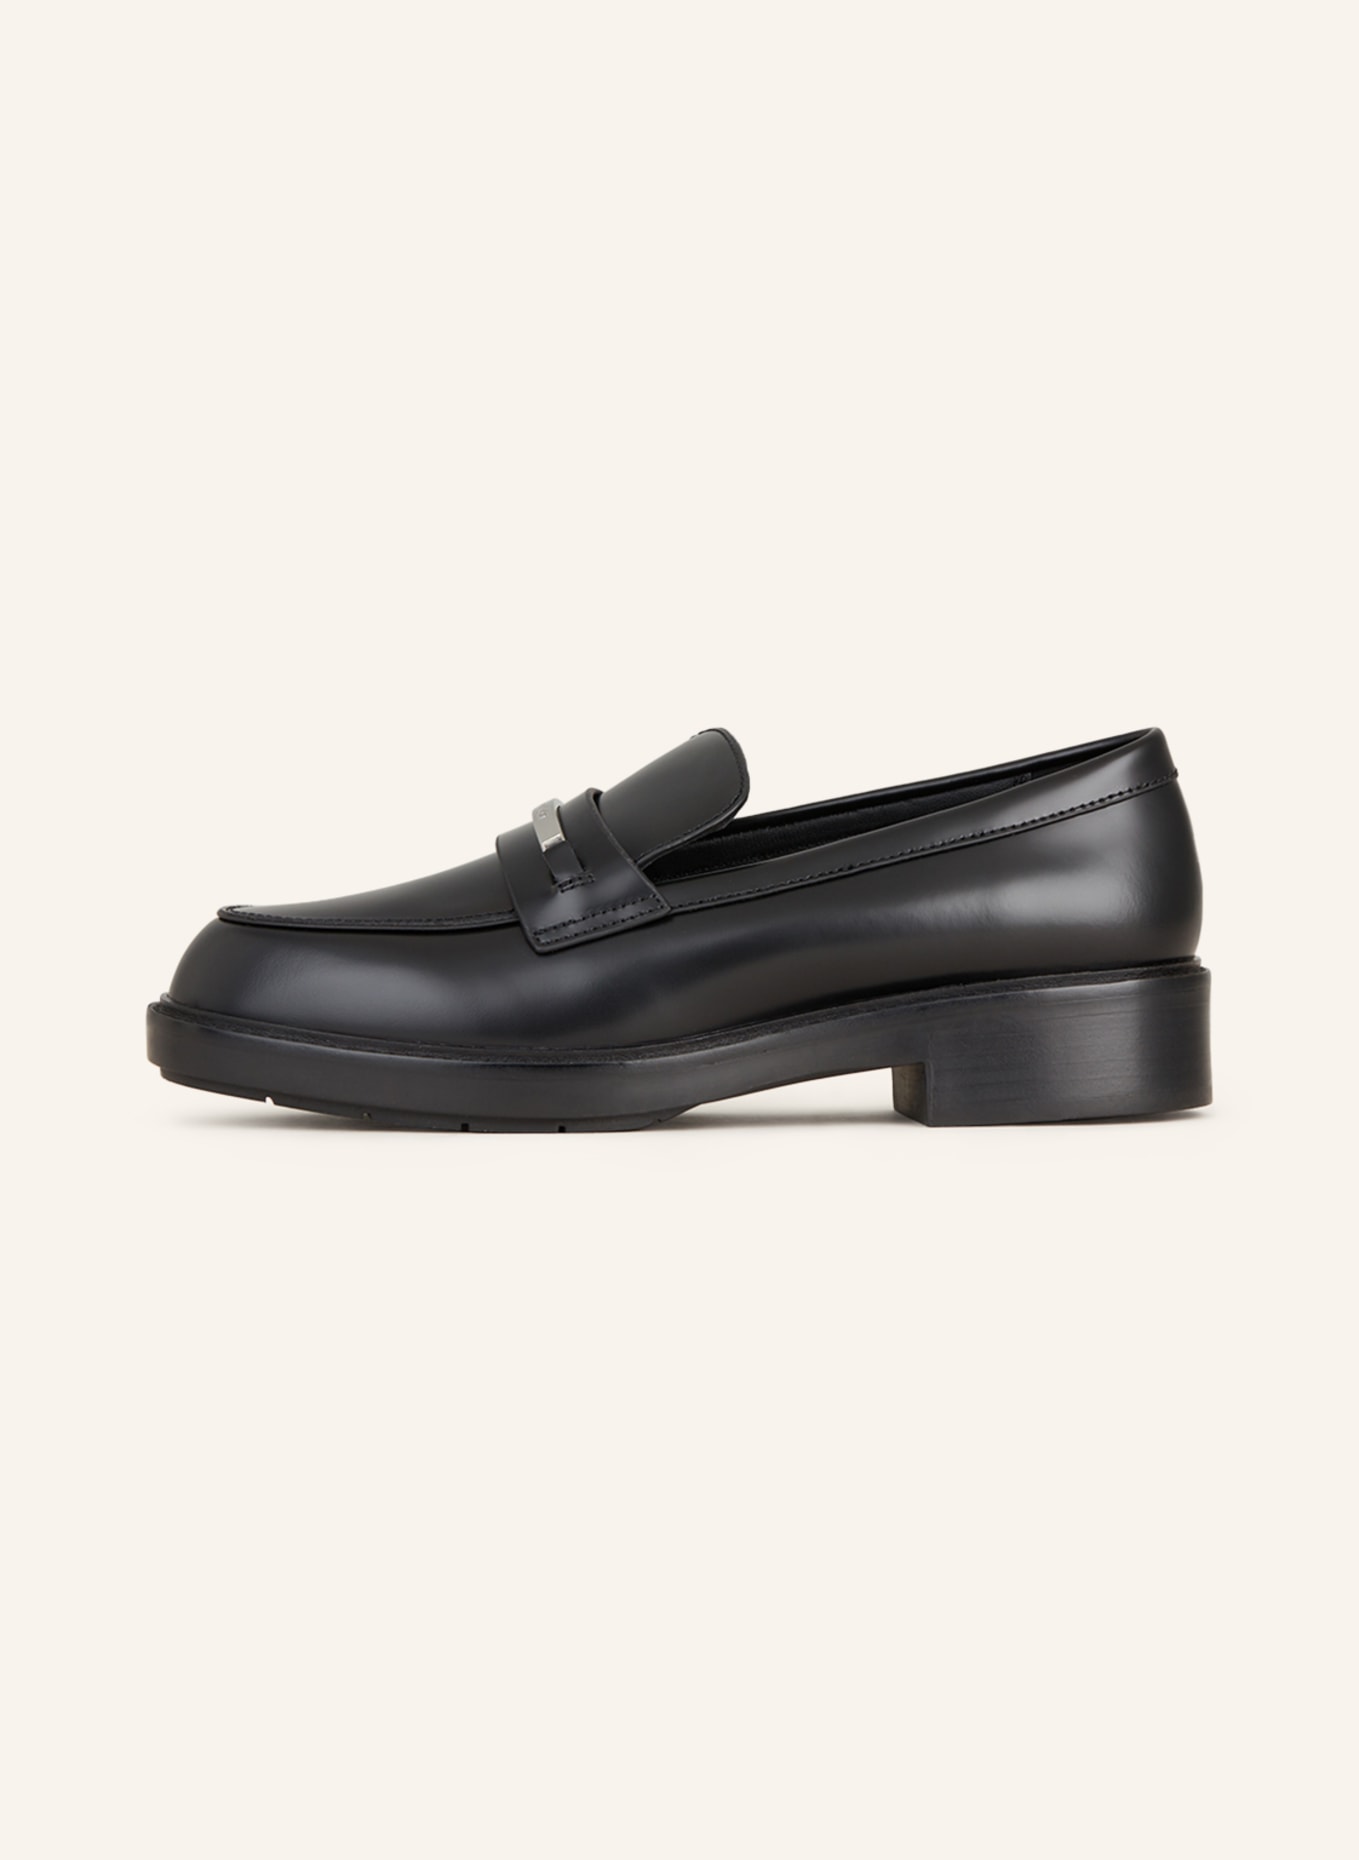 Calvin Klein Loafers in black